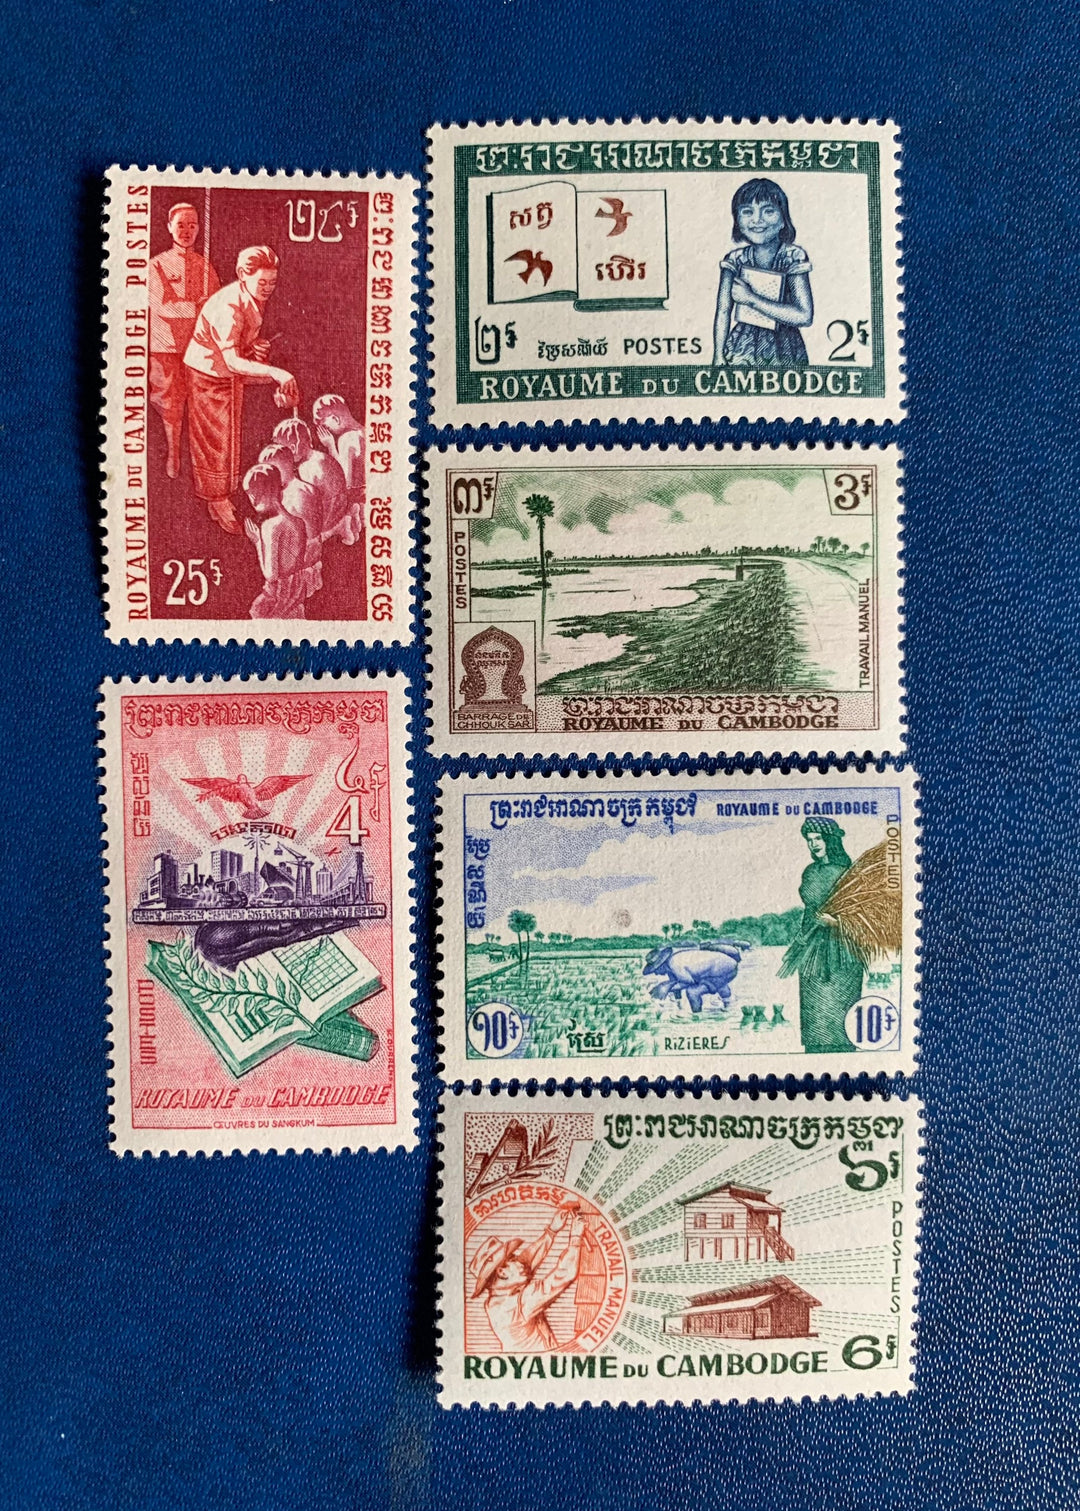 Cambodia- Original Vintage Postage Stamps- 1969 Community Movement